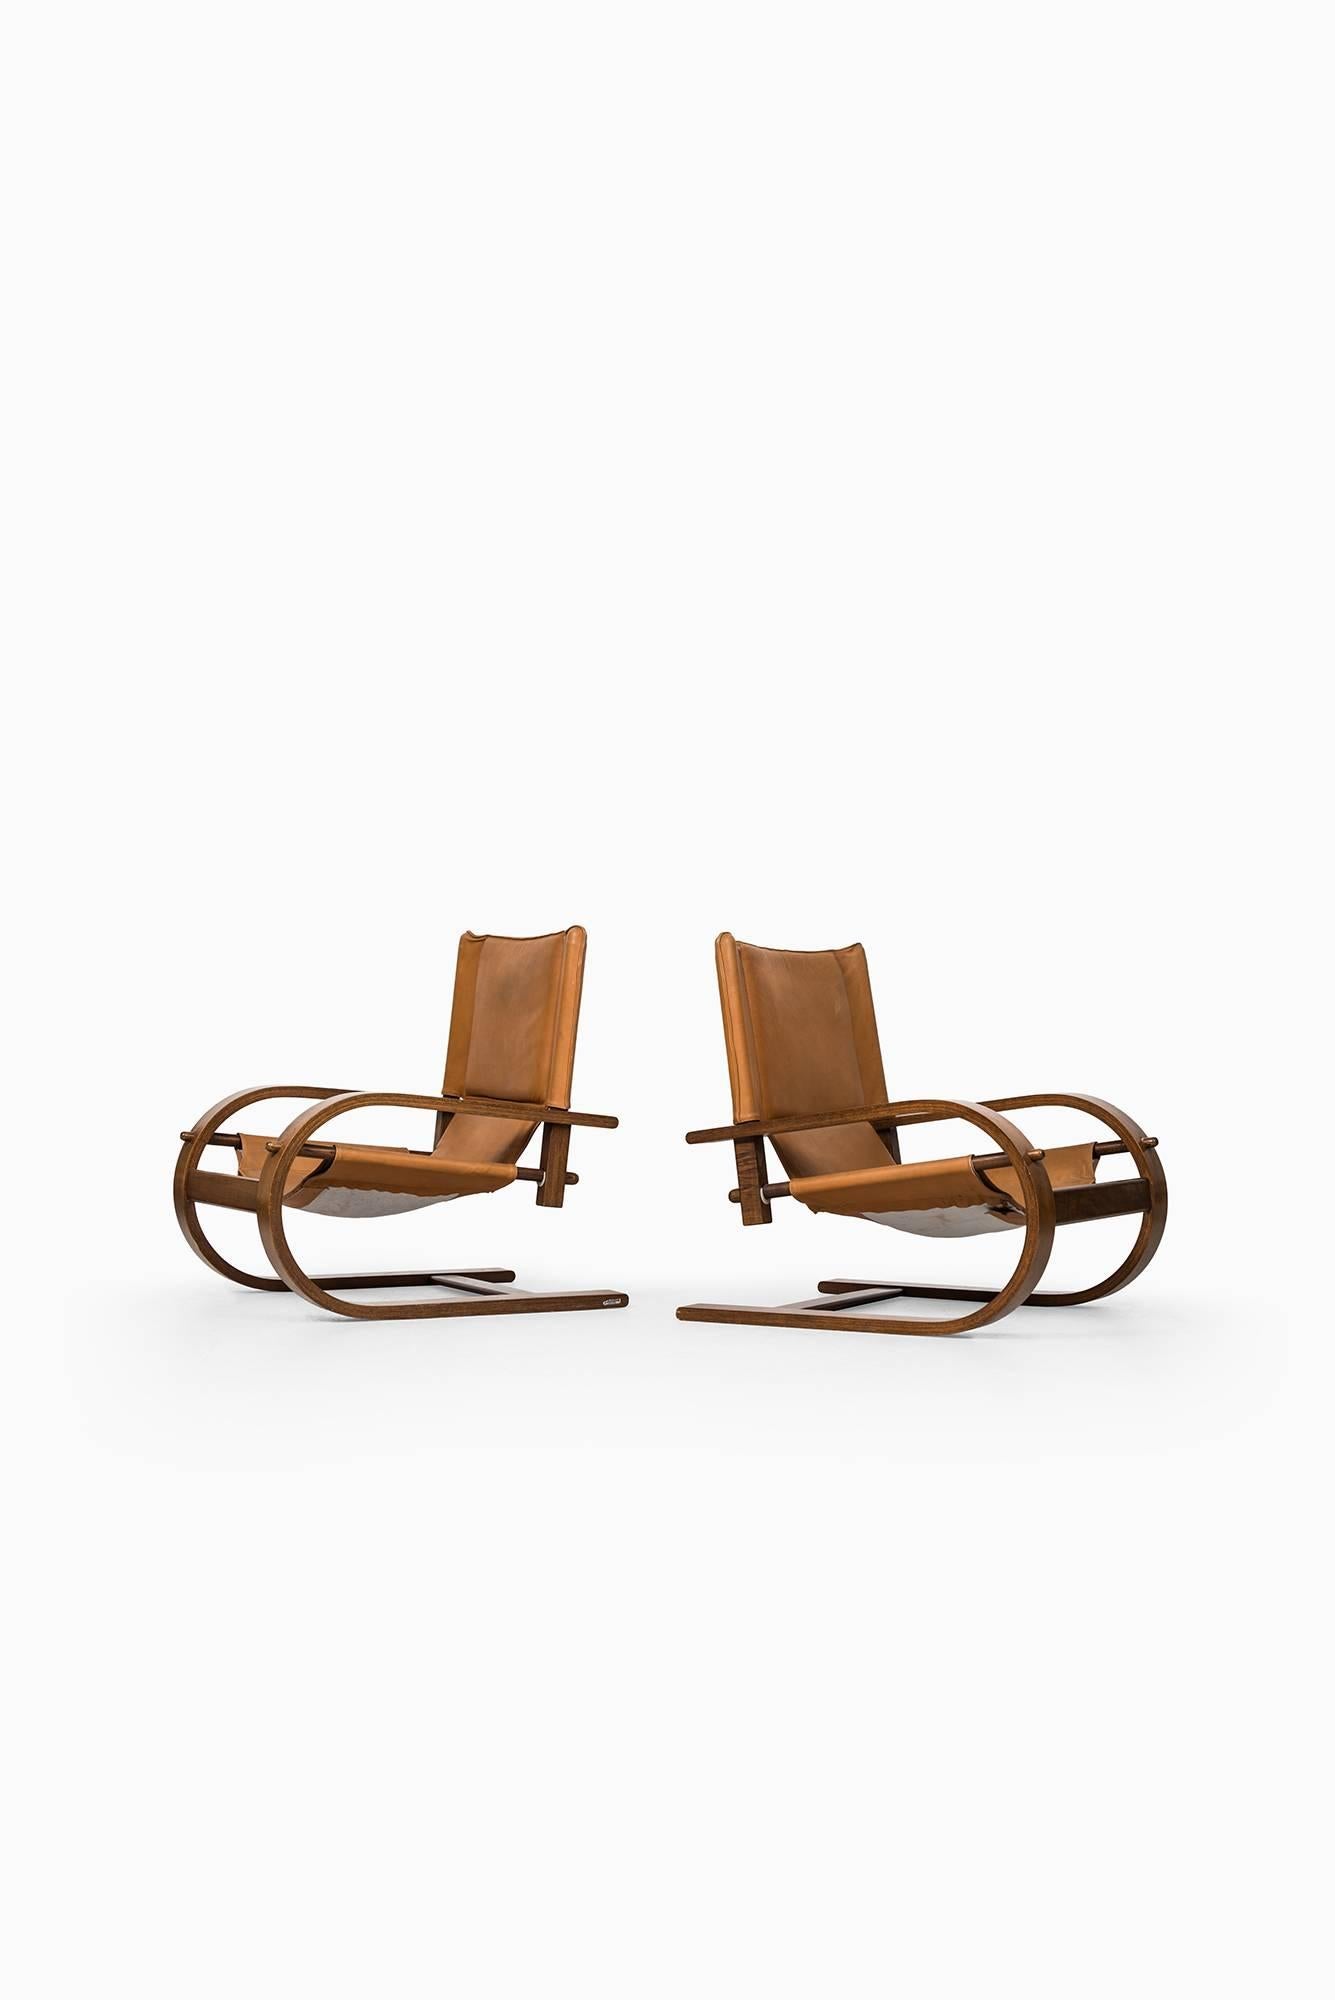 Italian Gionathan de Pas & Donato D’Urbino & Paolo Lomazzi Easy Chairs by Poltronova